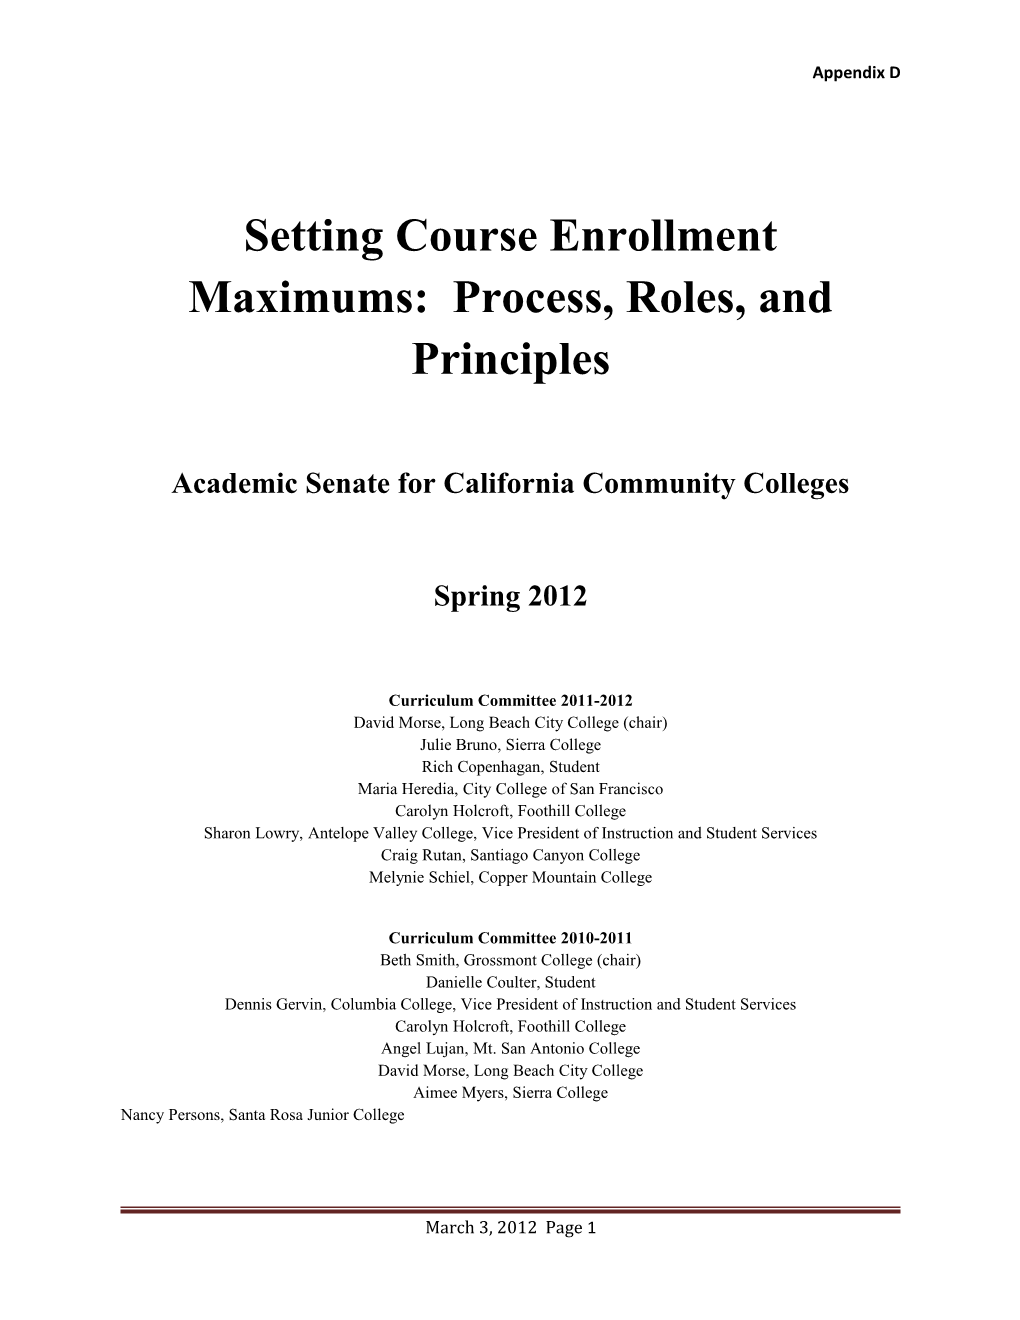 Setting Course Enrollment Maximums